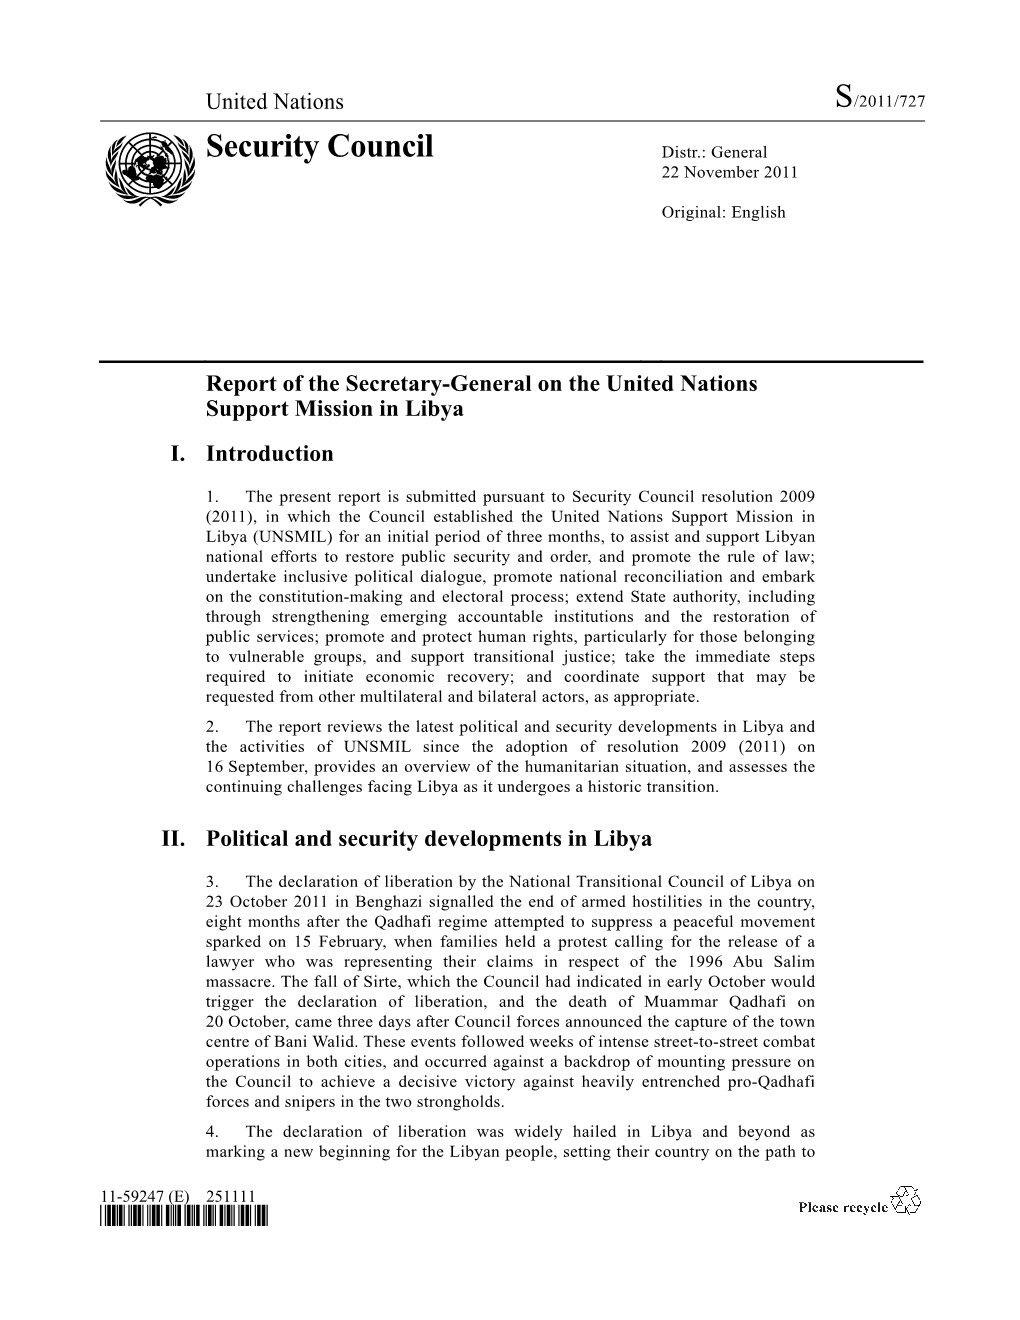 Security Council Distr.: General 22 November 2011